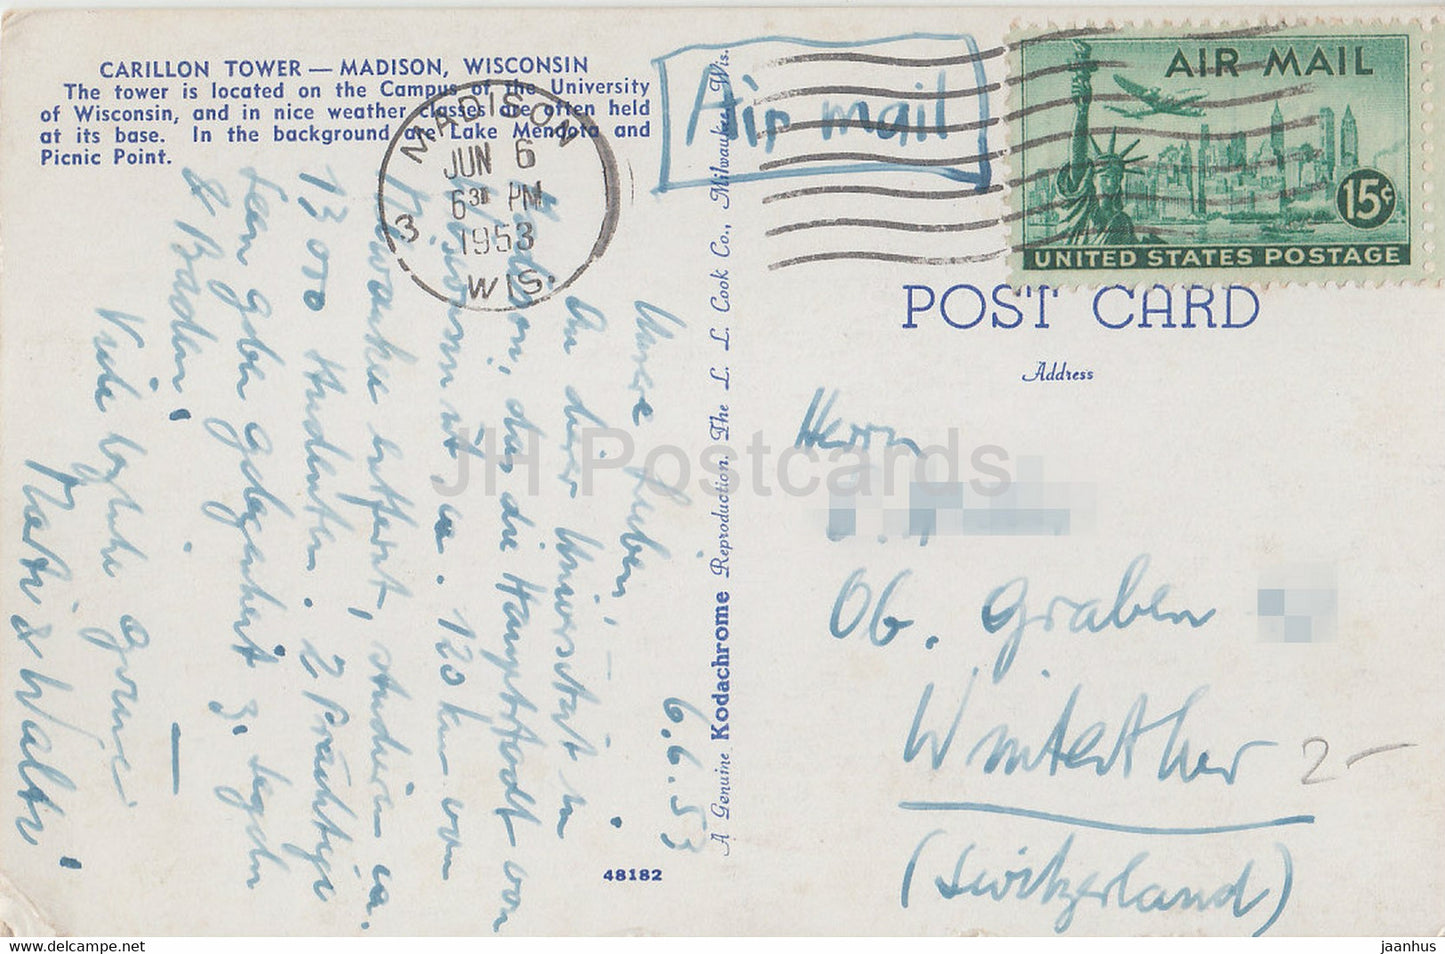 Madison - Carillon Tower - Wisconsin - alte Postkarte - 1953 - USA - gebraucht